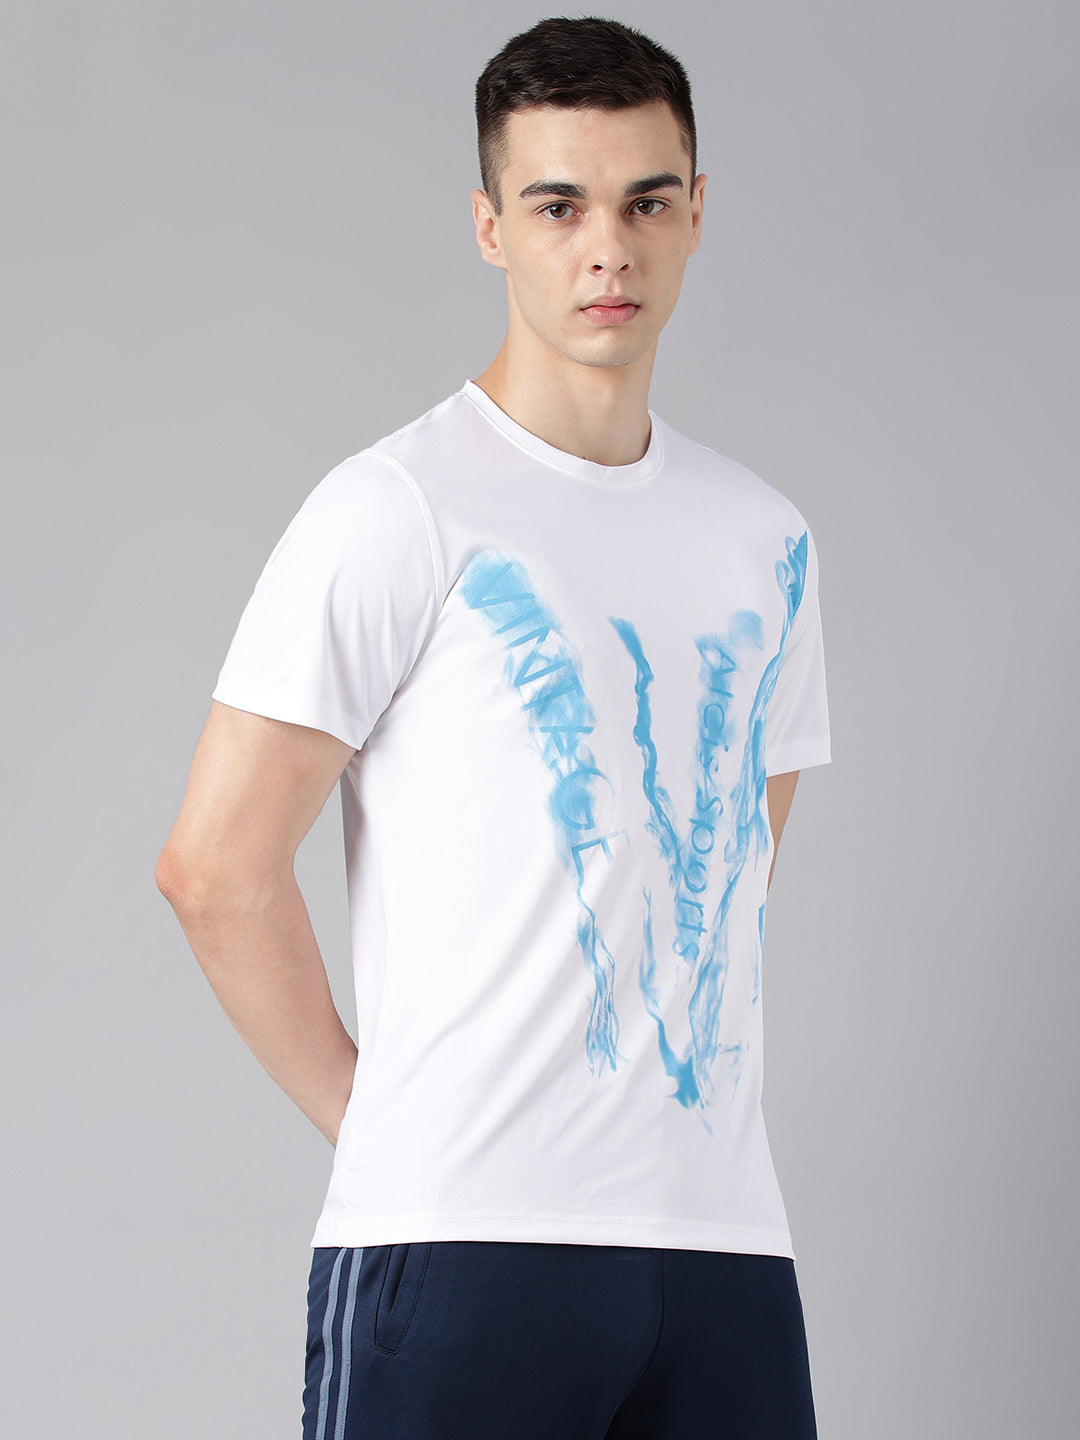 Alcis Men's Printed White Anti-Static Drytech+ Slim-Fit Training T-Shirt